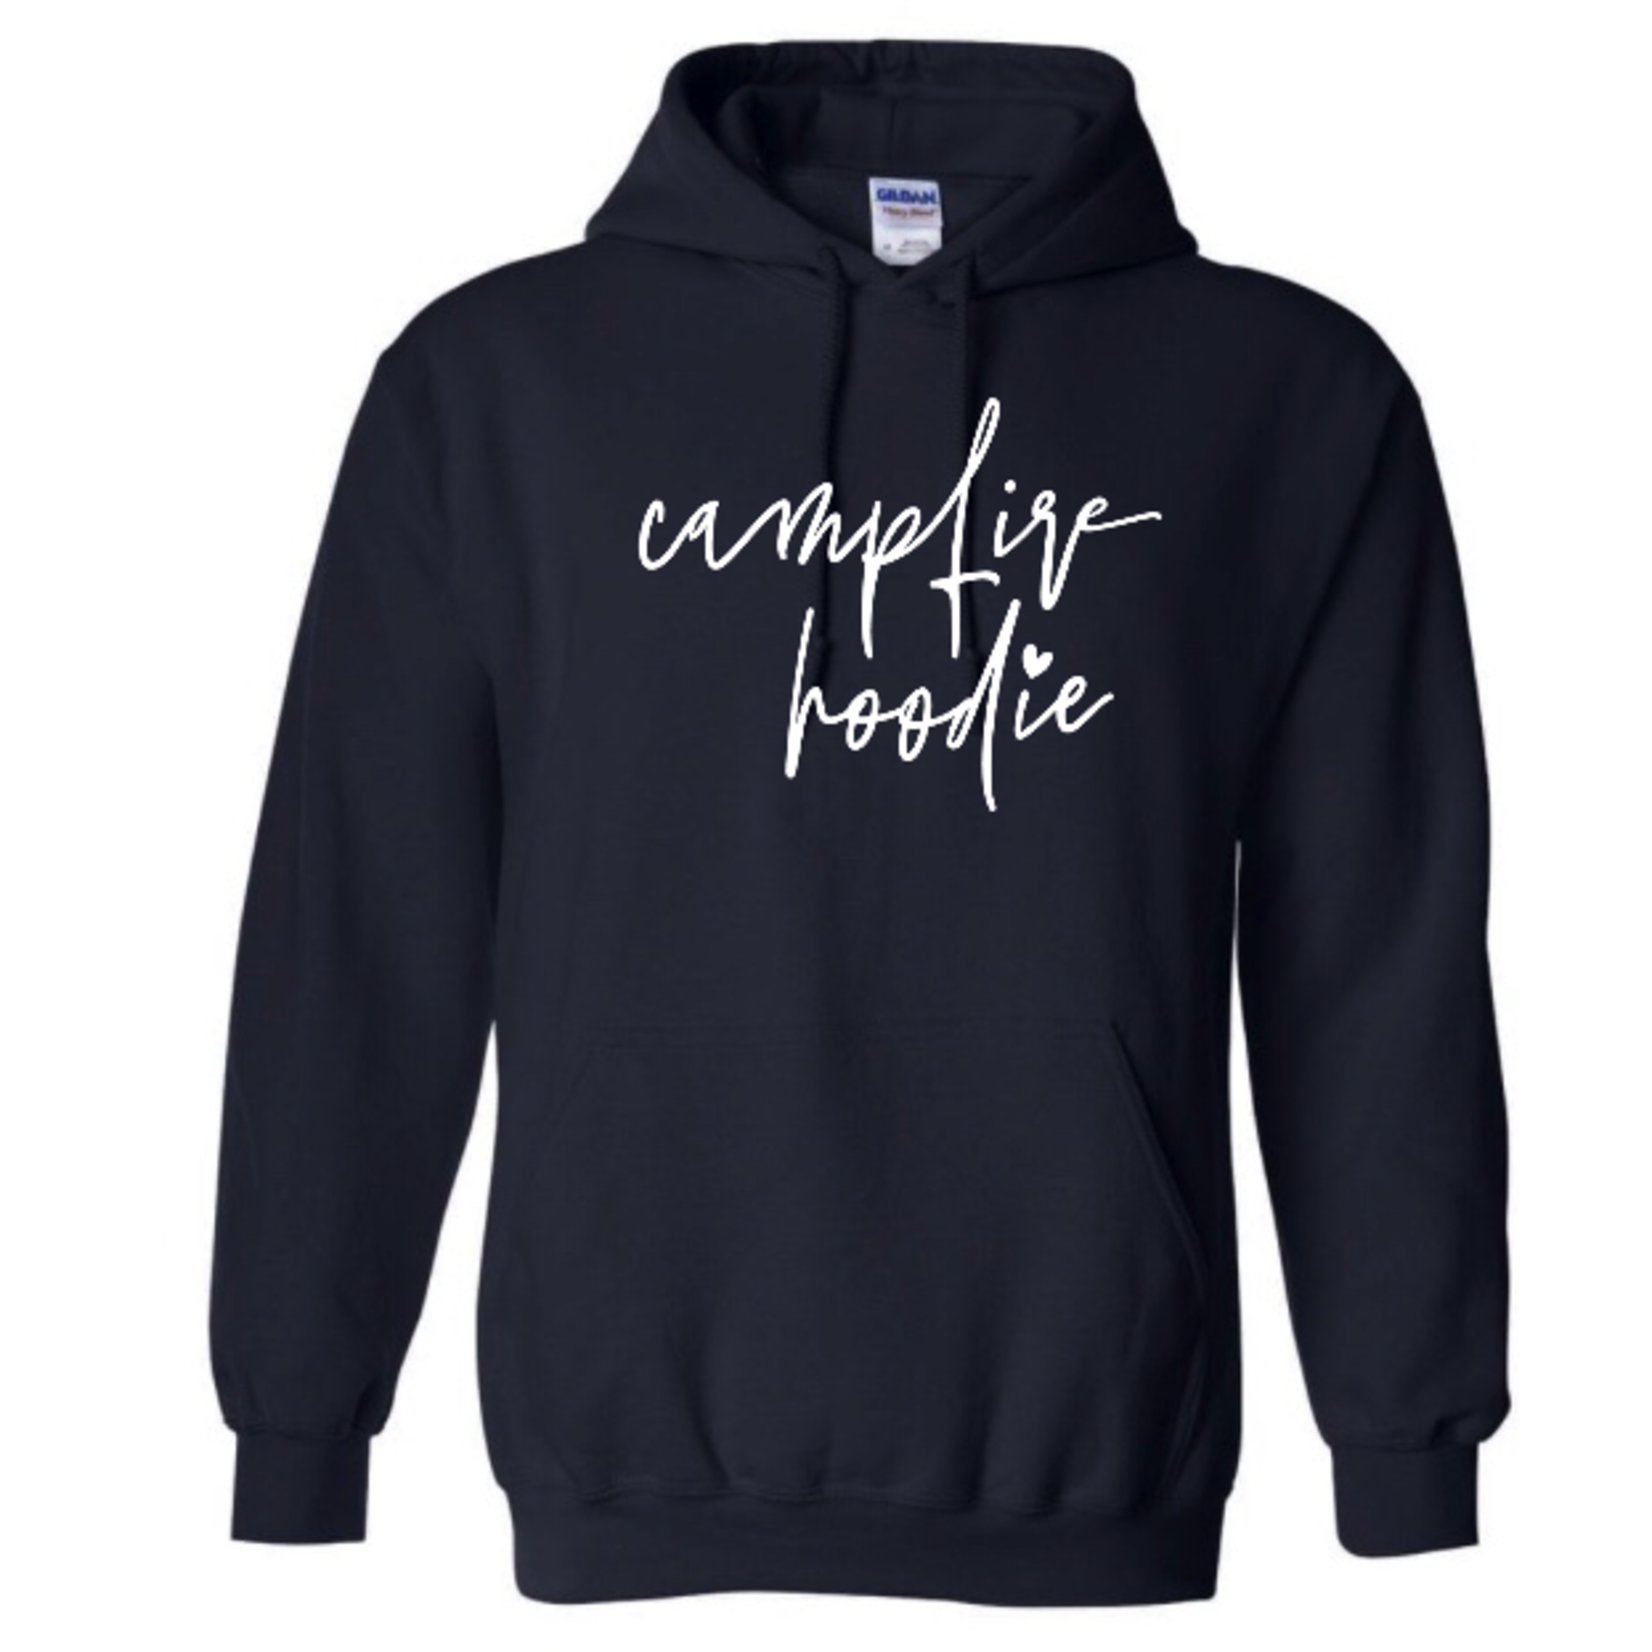 Women's Sweater:  Campfire hoodie